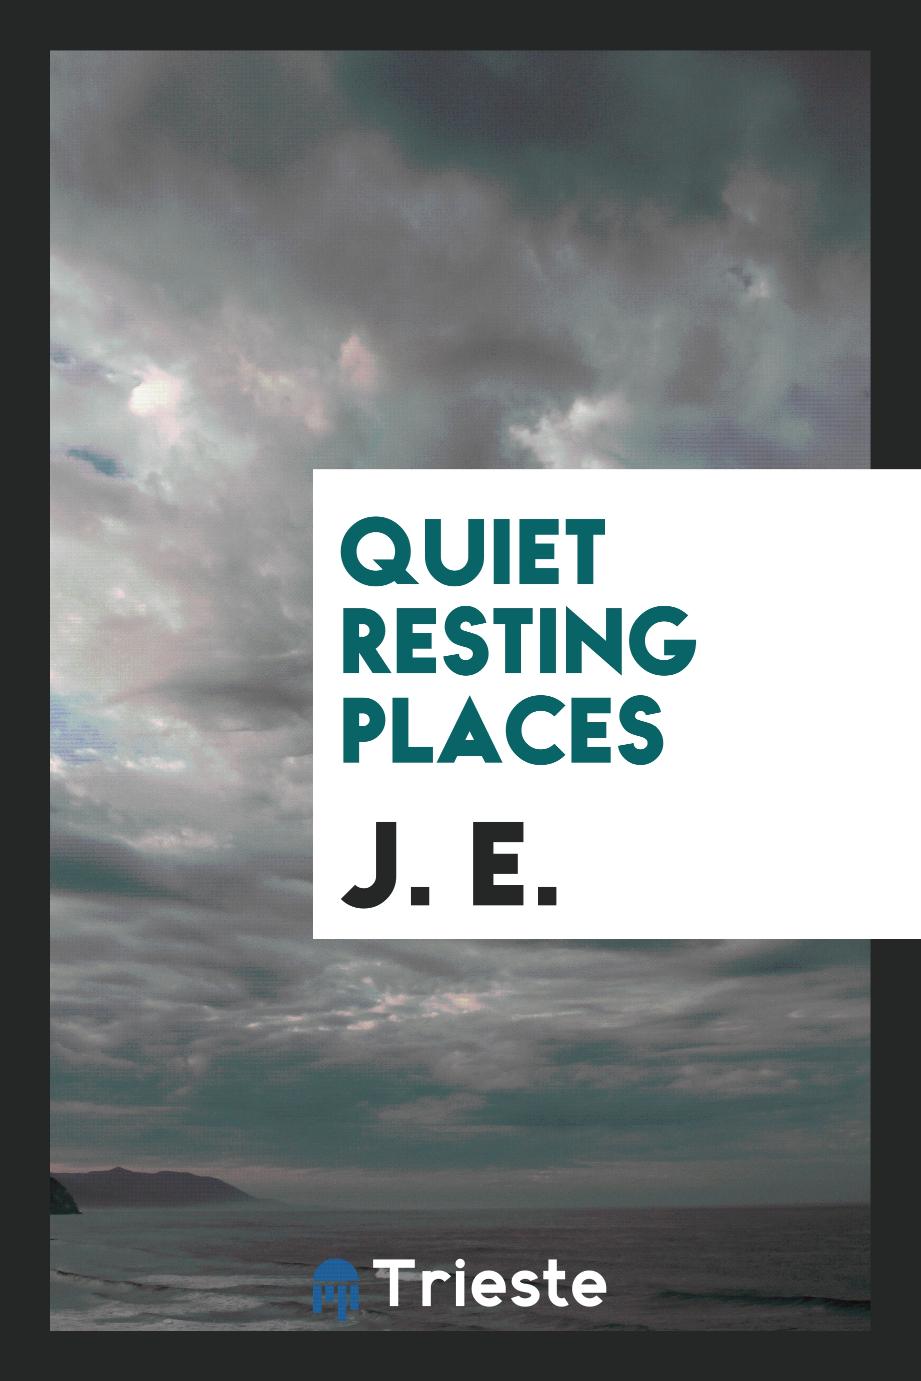 Quiet resting places